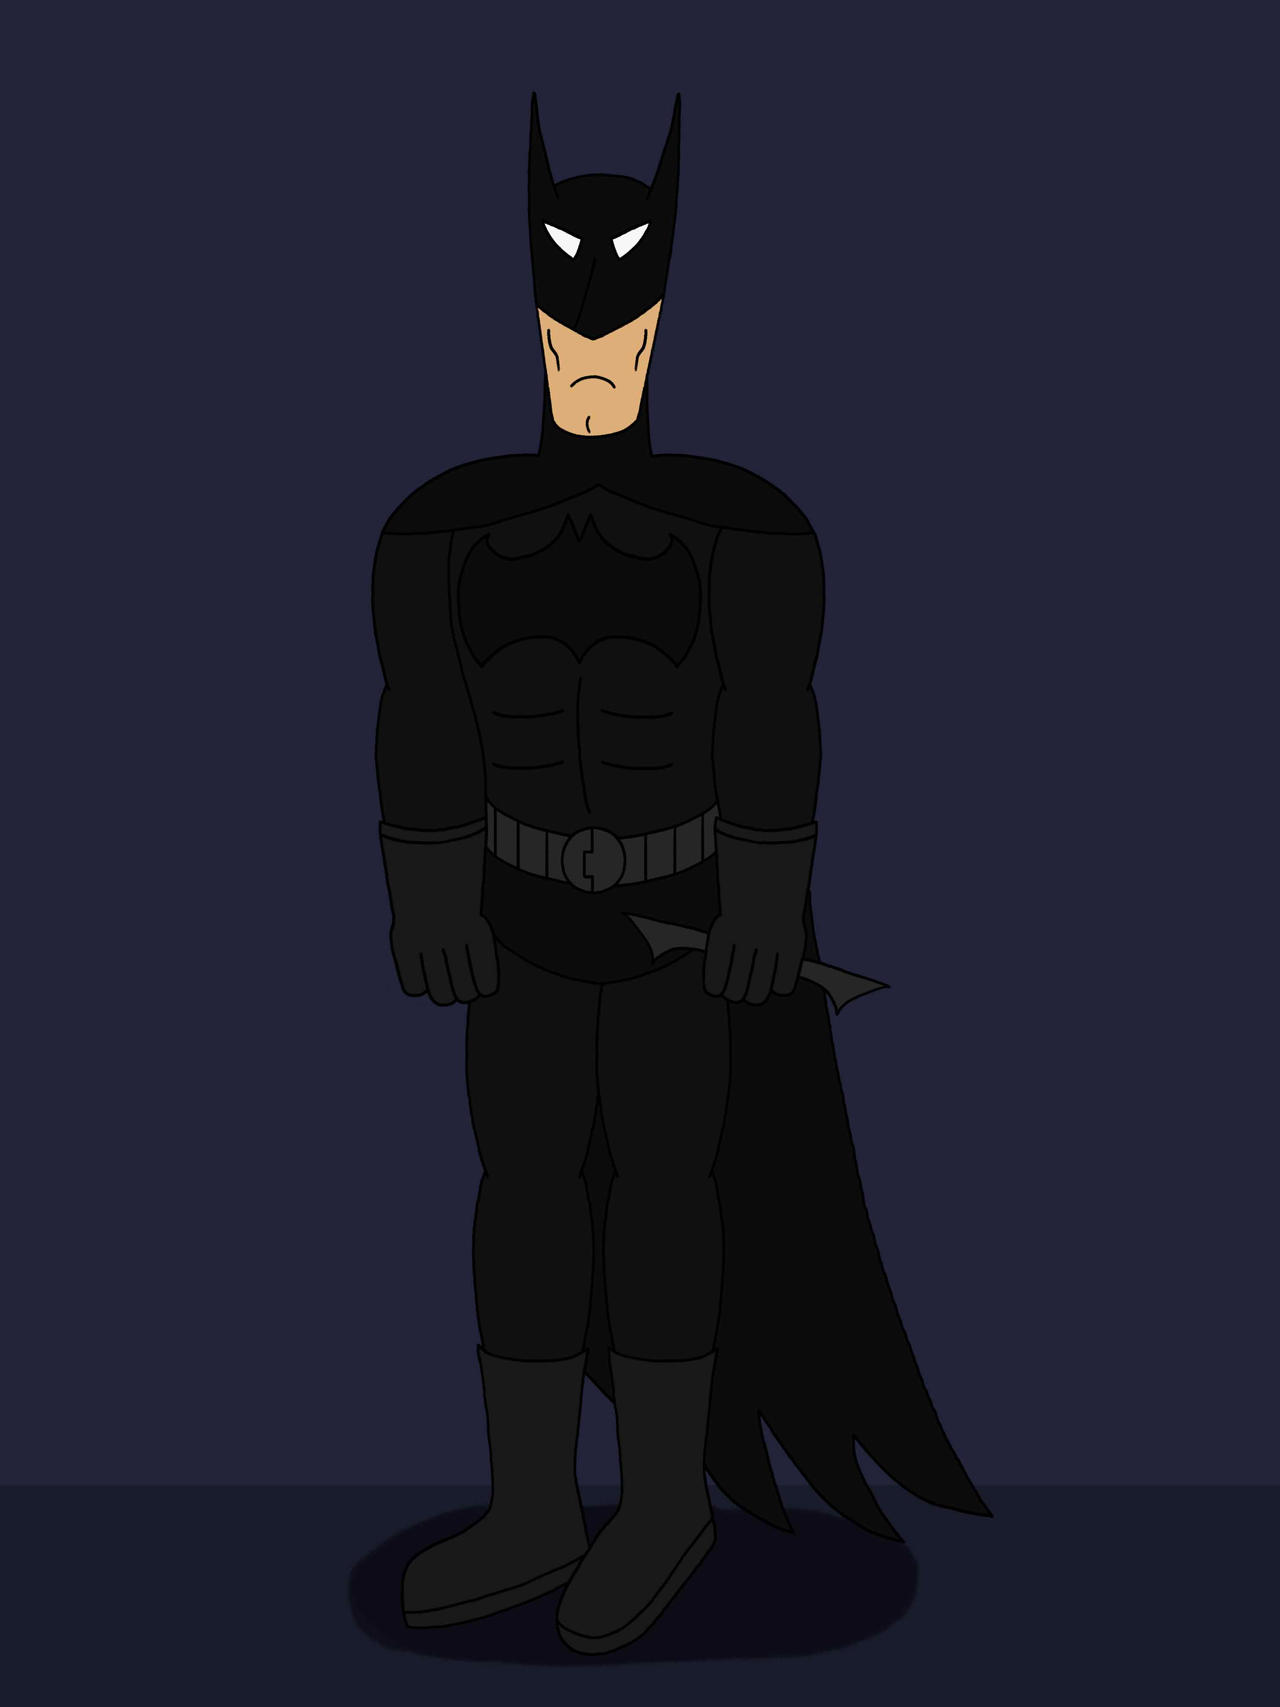 The Batman Redesign 2022 by TimBurton01 on DeviantArt